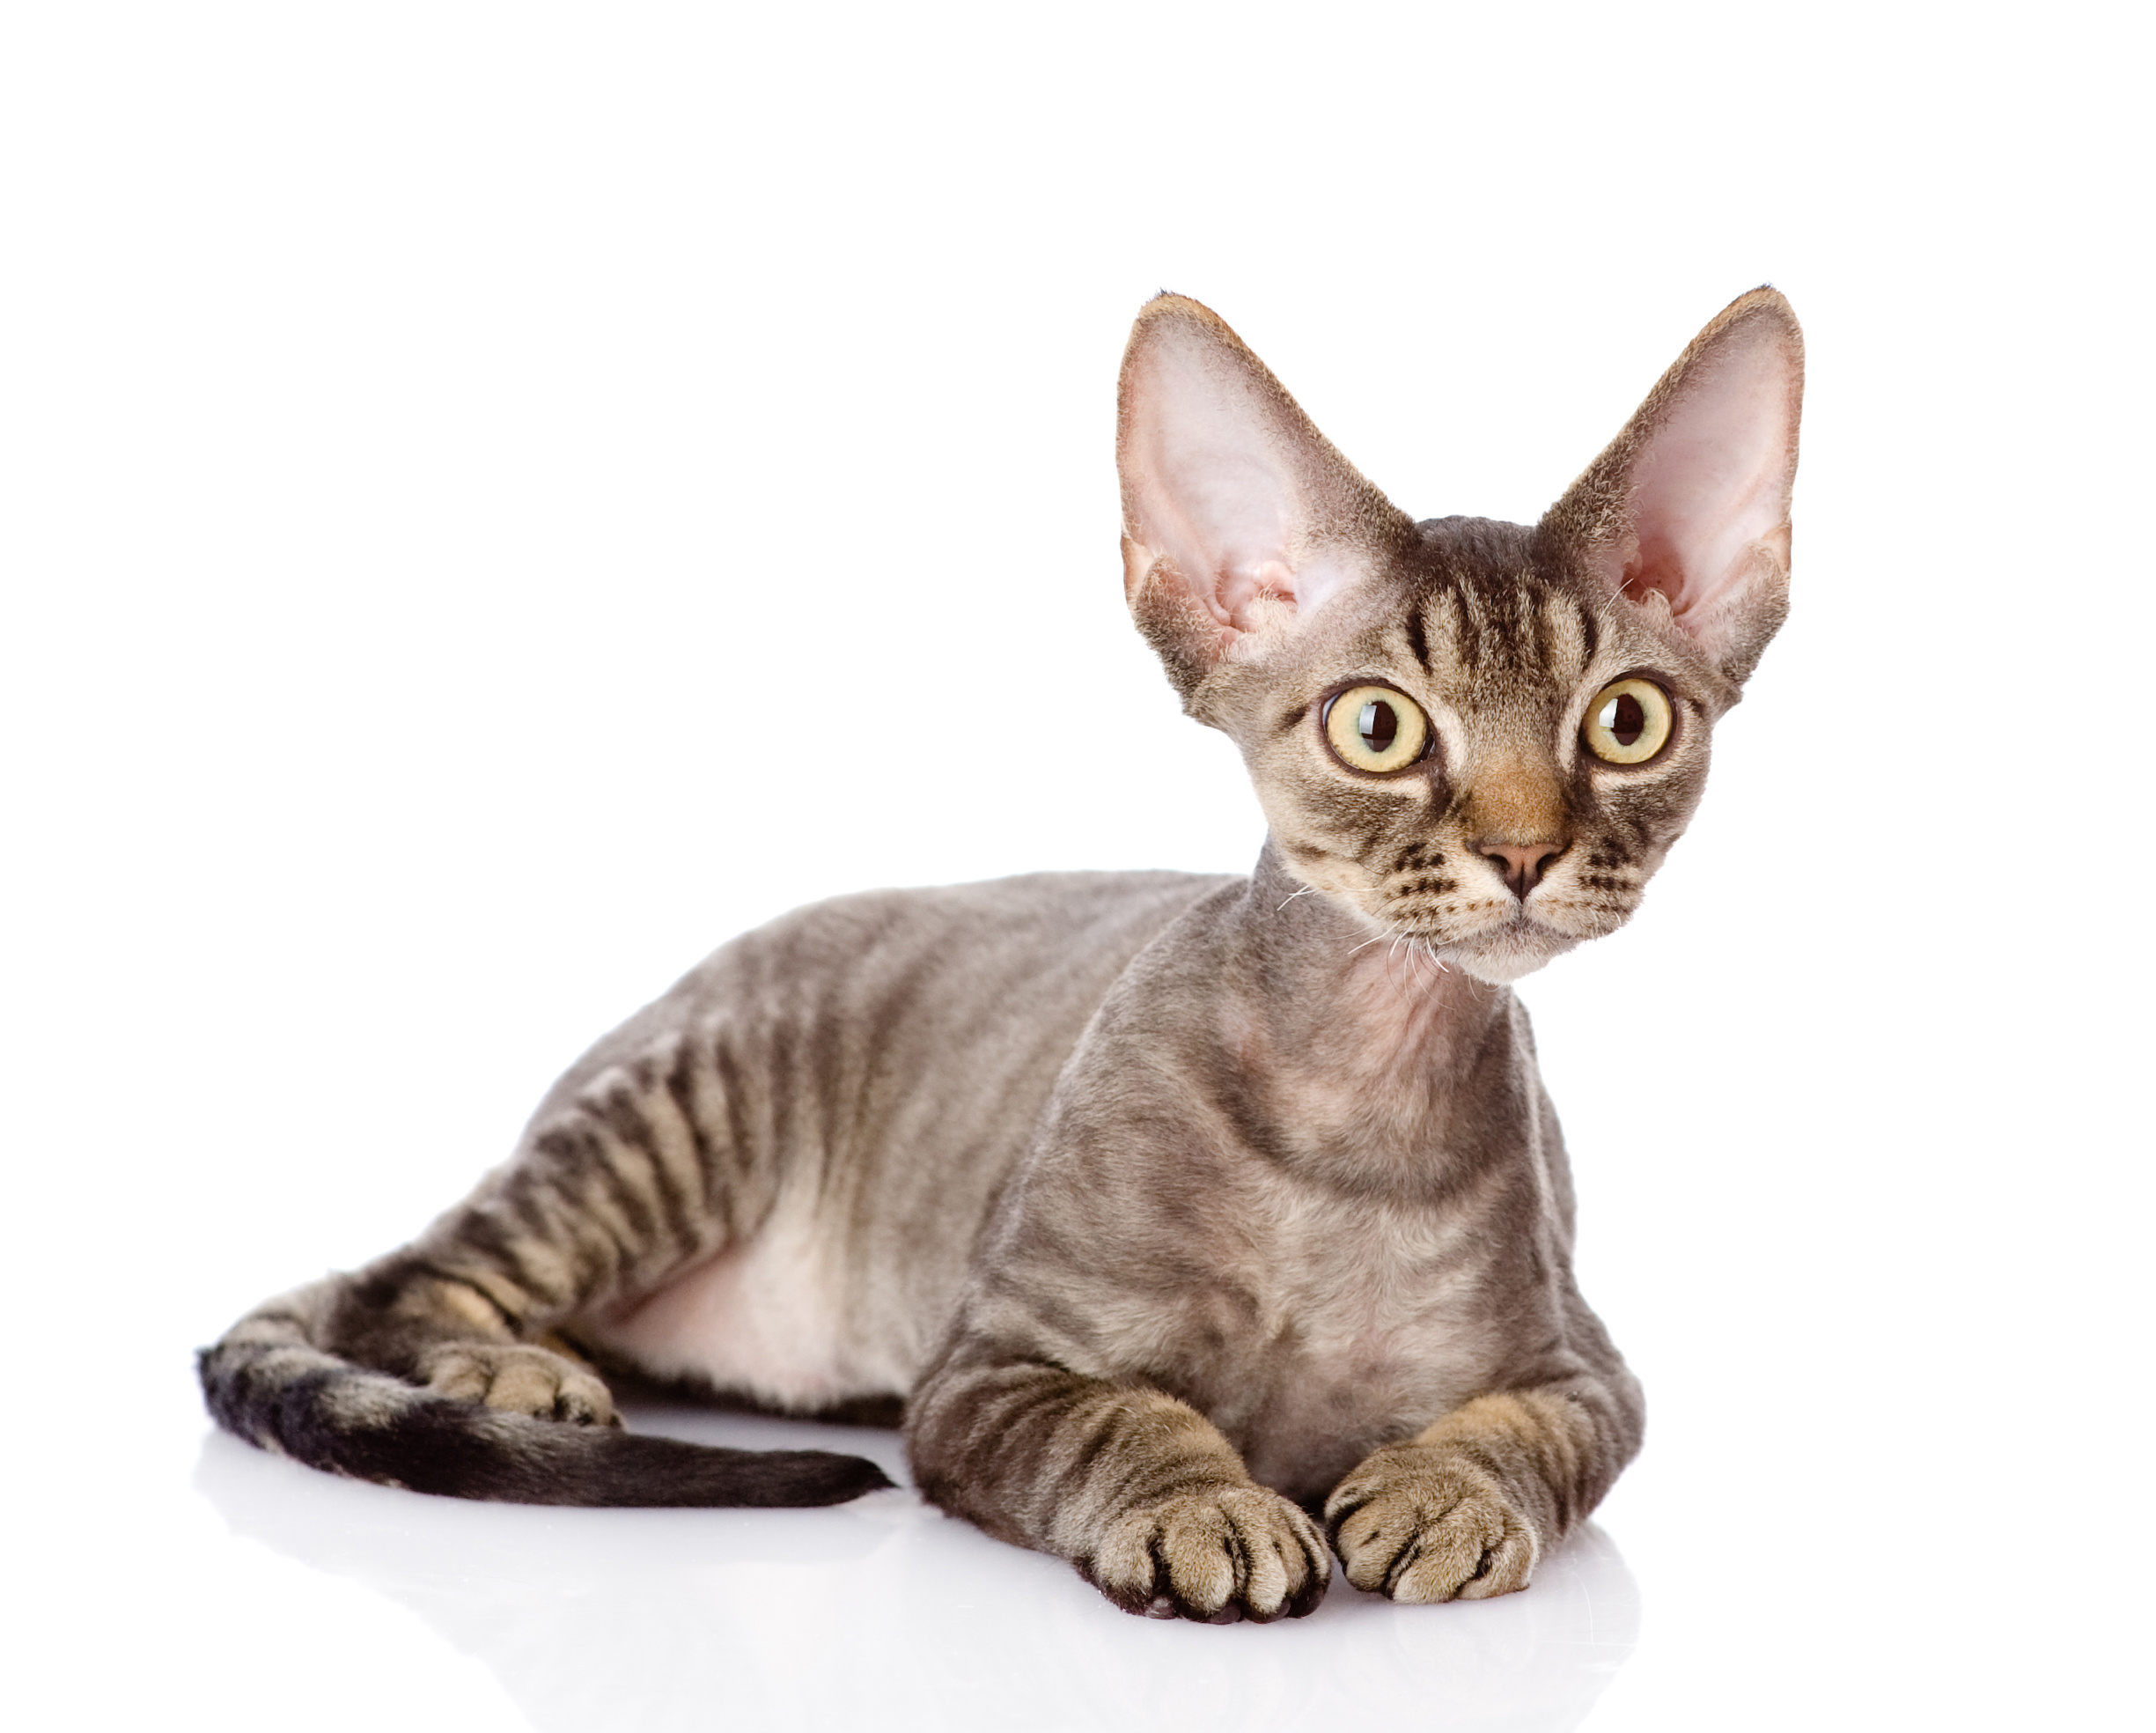 Conheça o gato Devon Rex. Fonte: Adobe Stock.